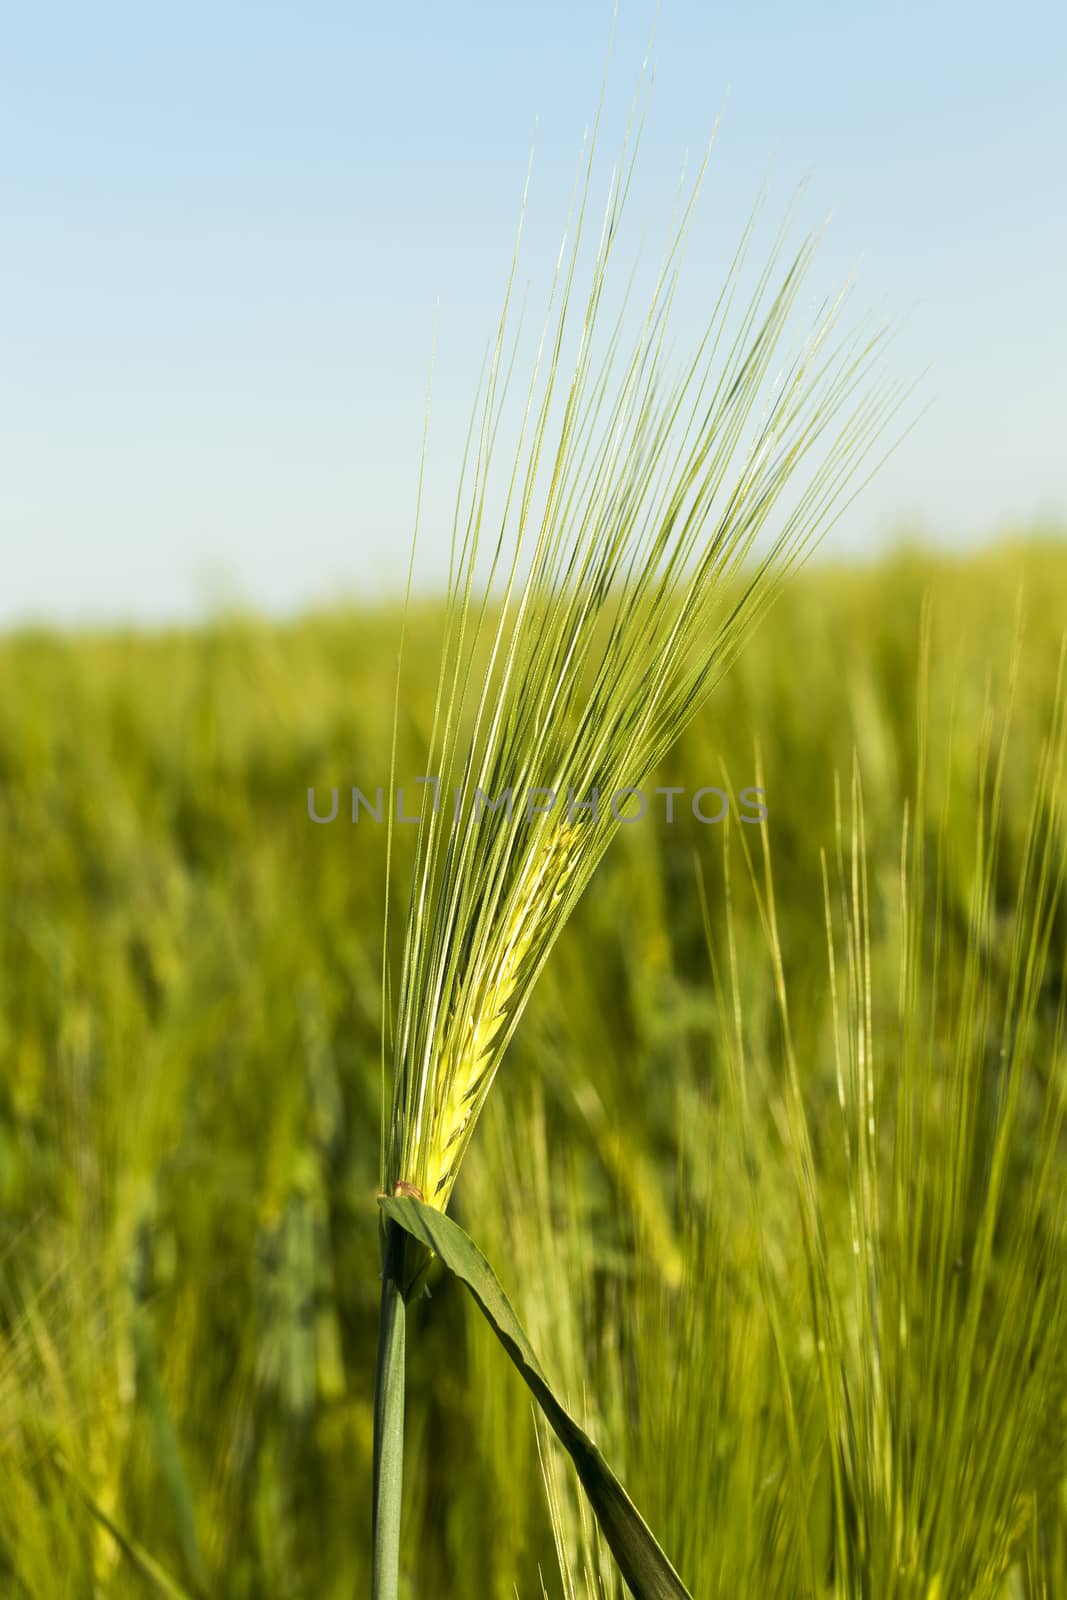 photographed closeup immature cereals. spring season. wheat